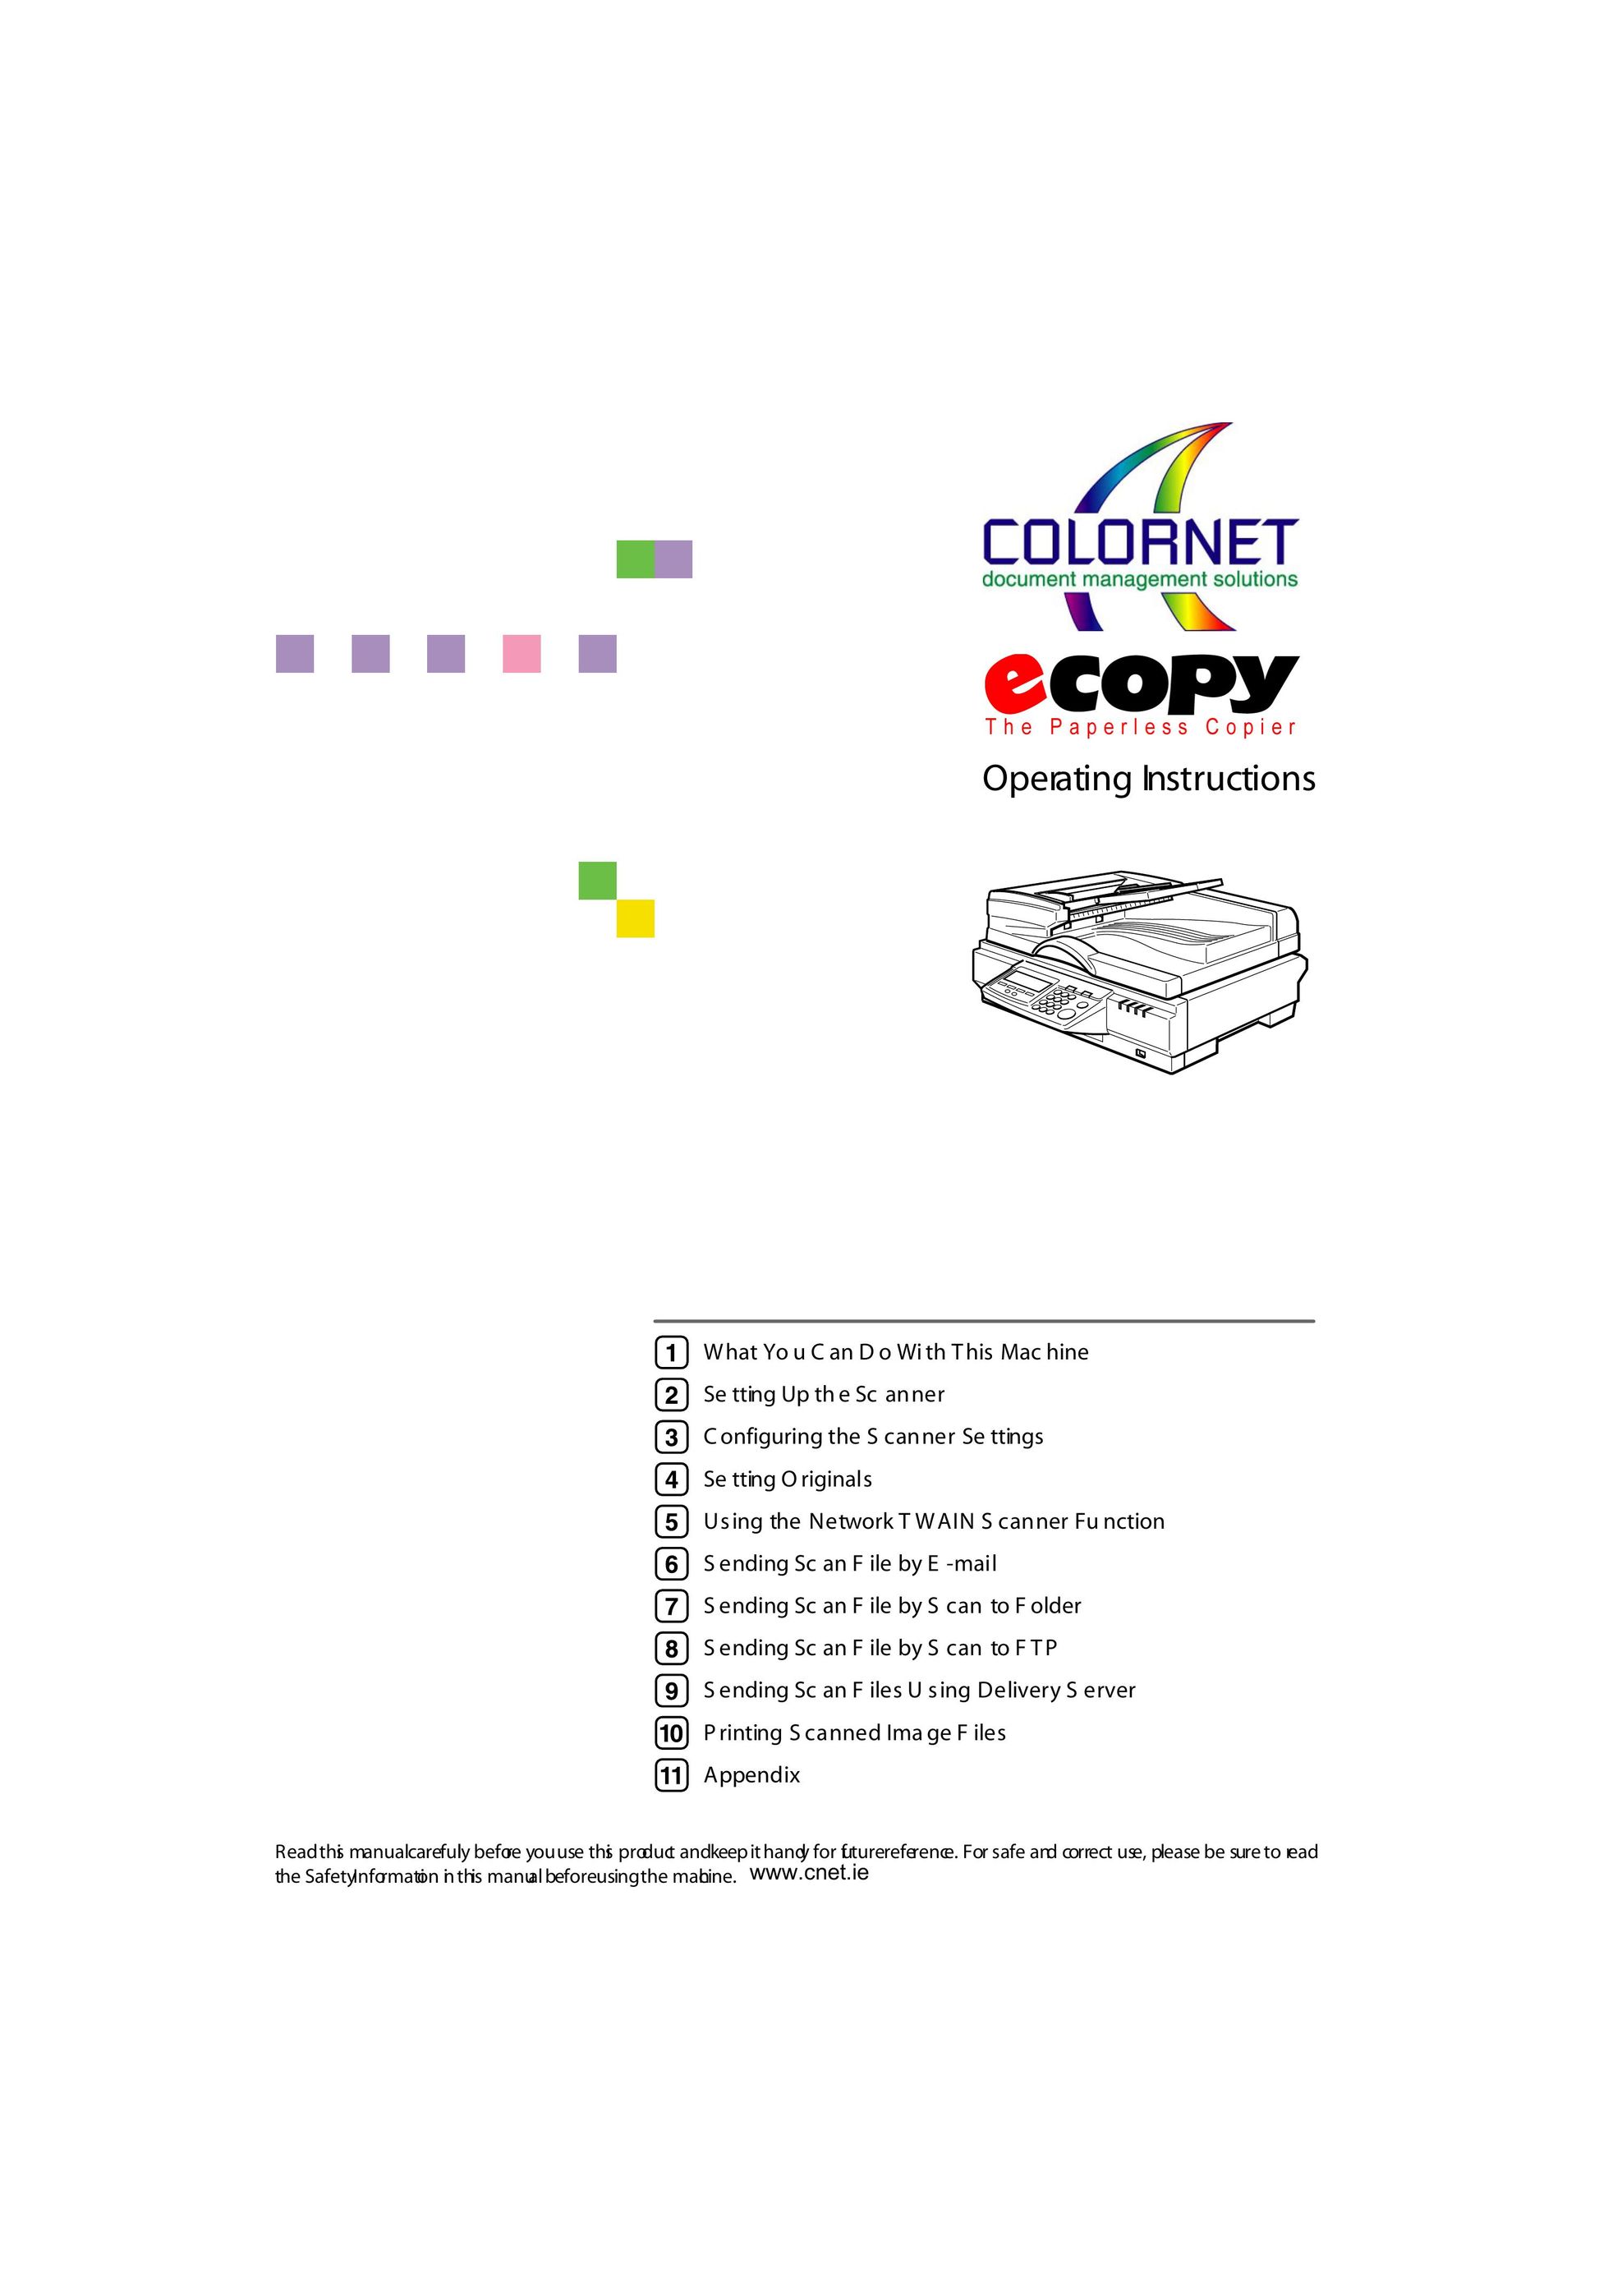 CNET Printer/Fax/Scanner/Copier All in One Printer User Manual